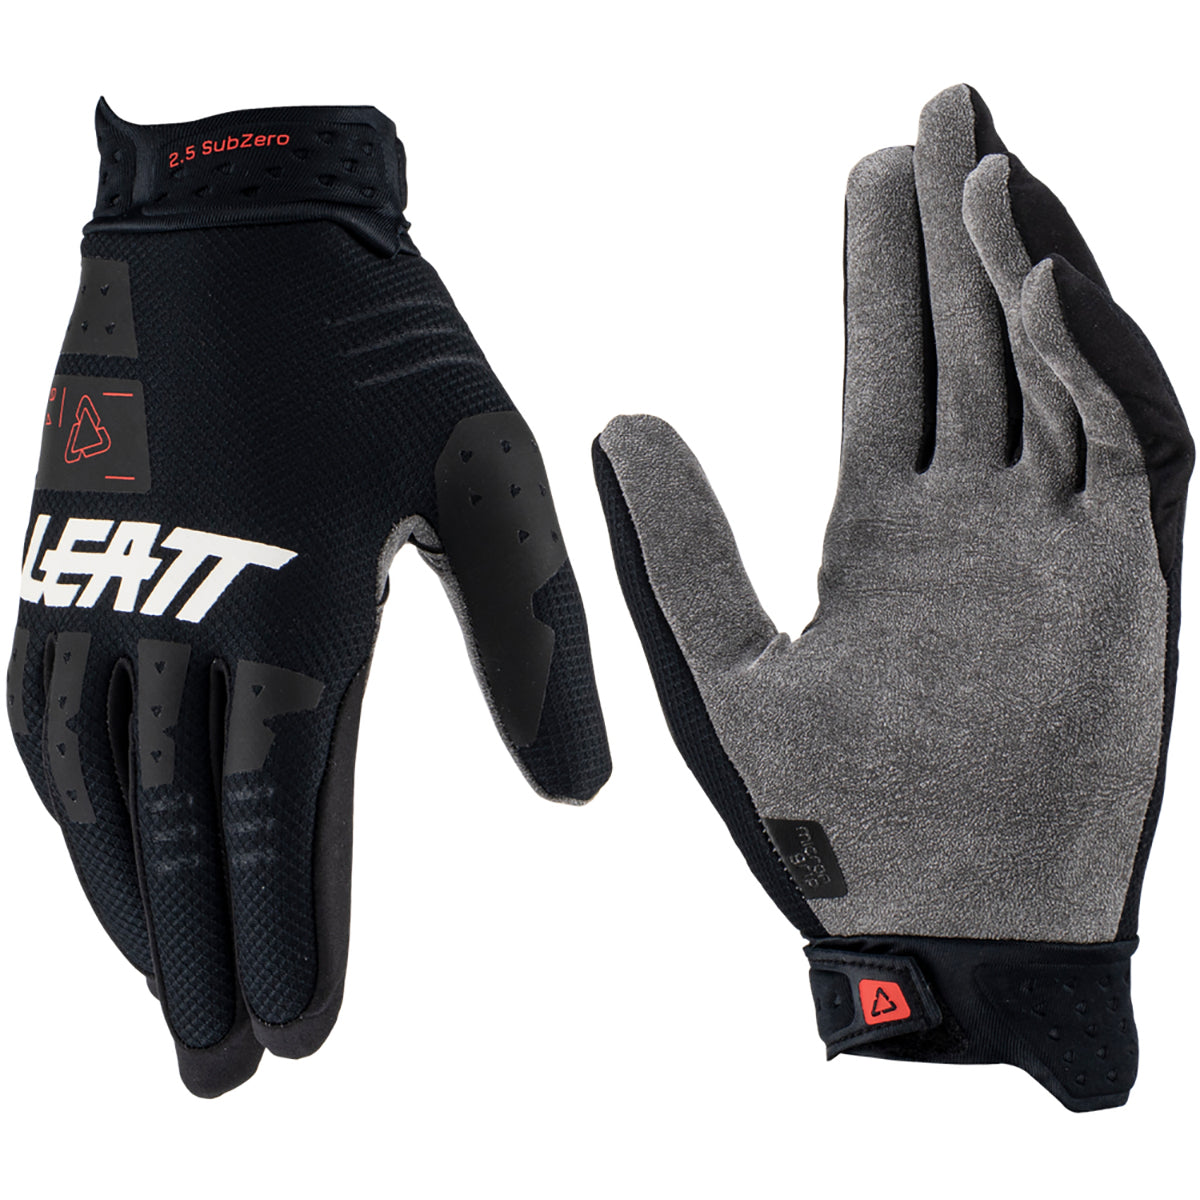 Leatt SubZero 2.5 Adult Off-Road Gloves-6023040750